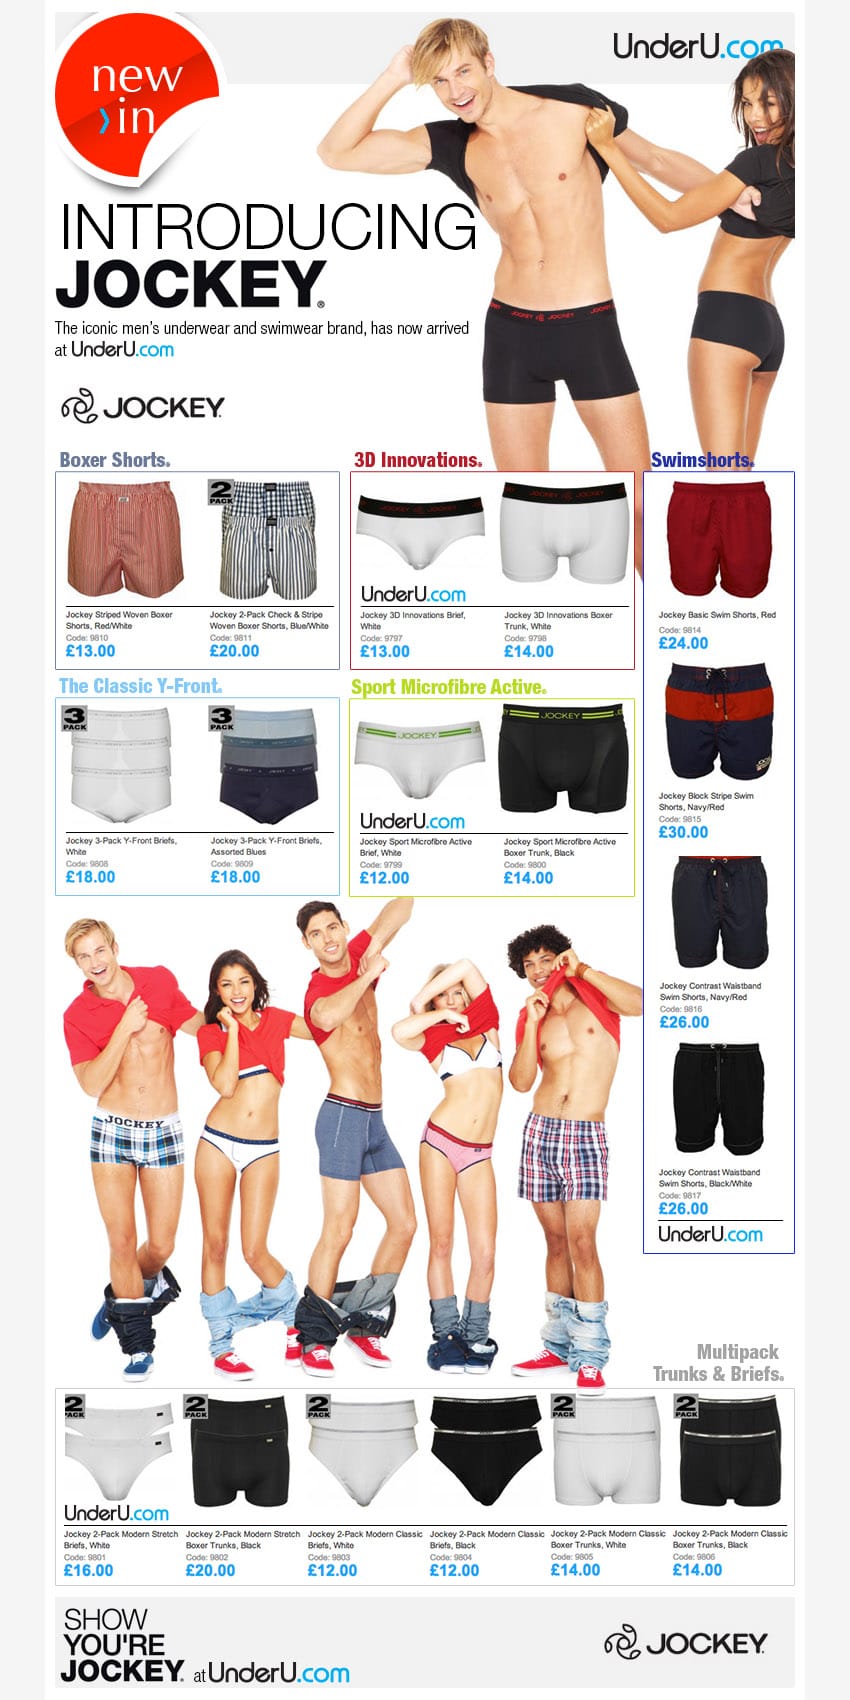 JOCKEY - iconic new underwear and swimwear brand at